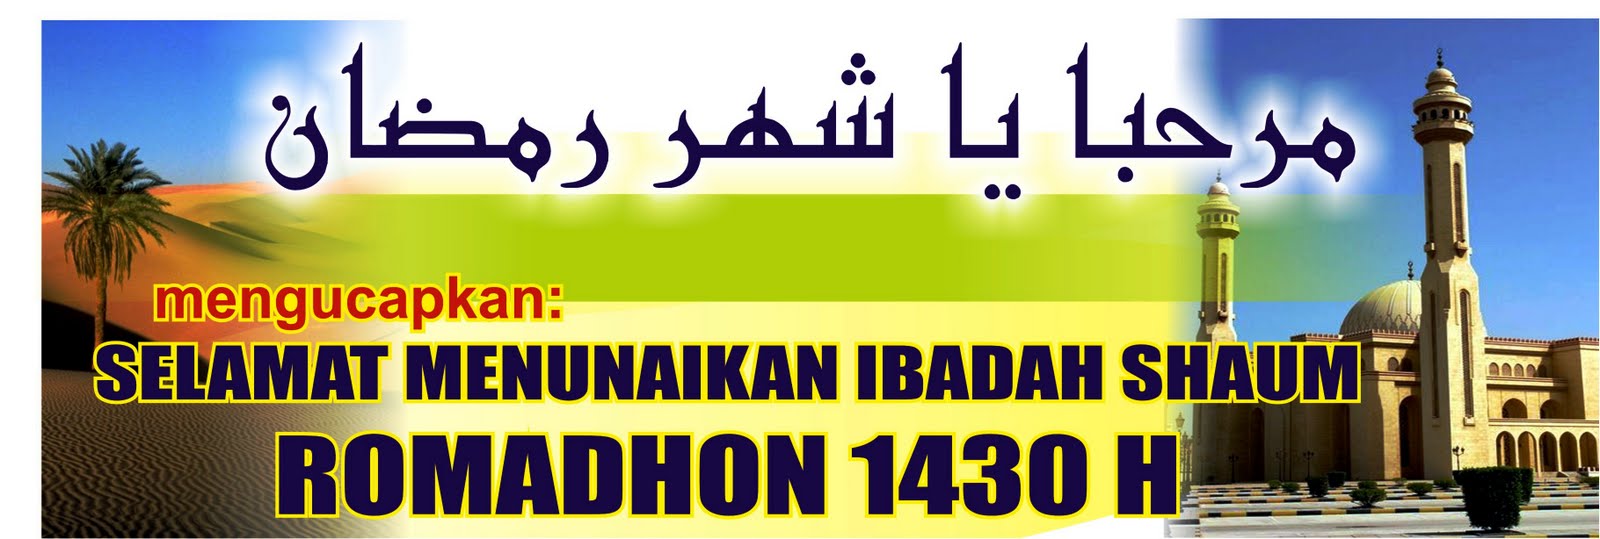  image Gambar Spanduk Menyambut Ramadhan PC Android iPhone